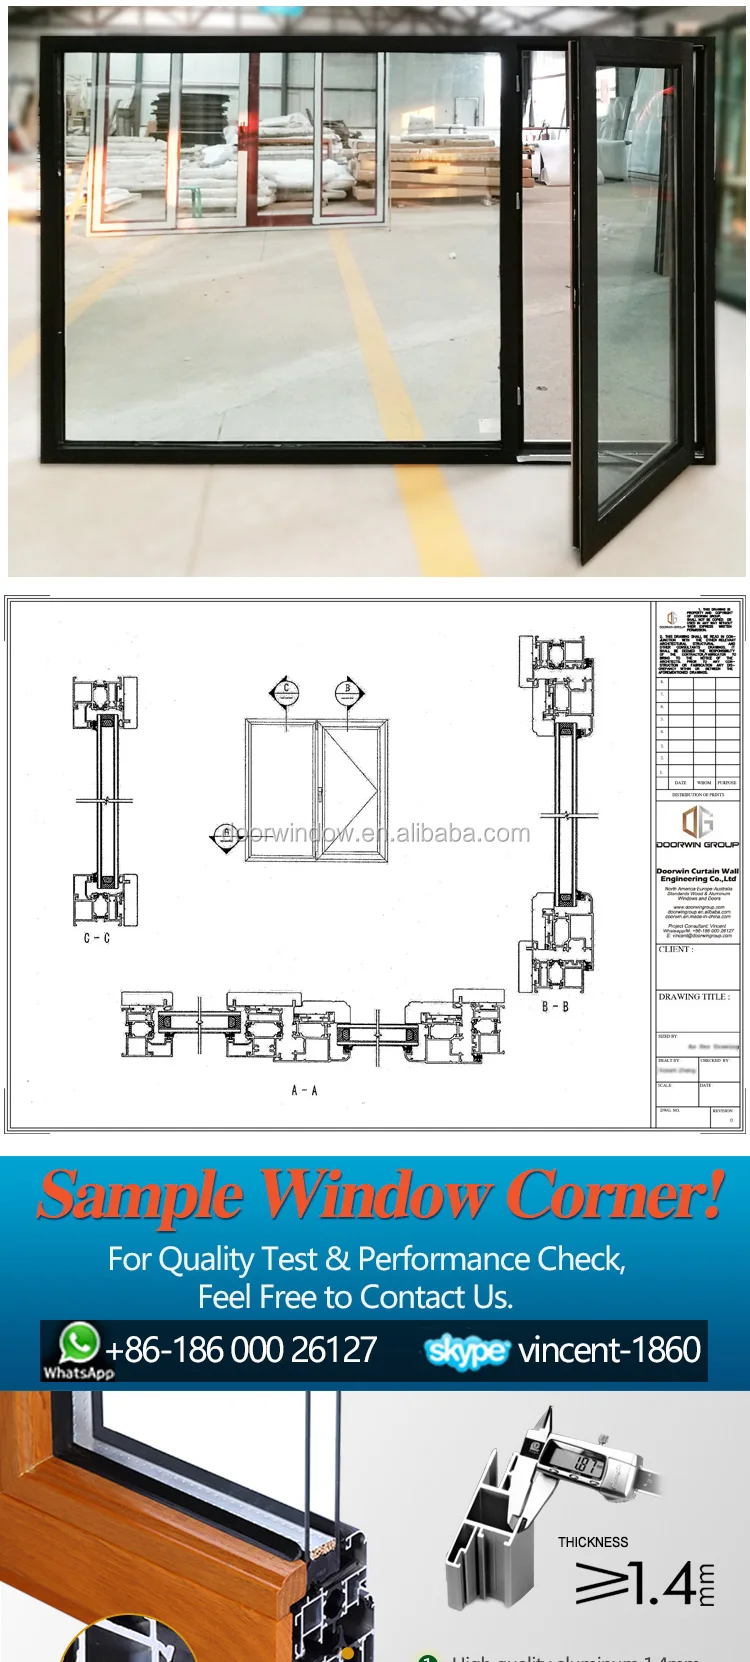 Rolling & Knurling Machine for Aluminum profile buy aluminium windows online uk build window frames